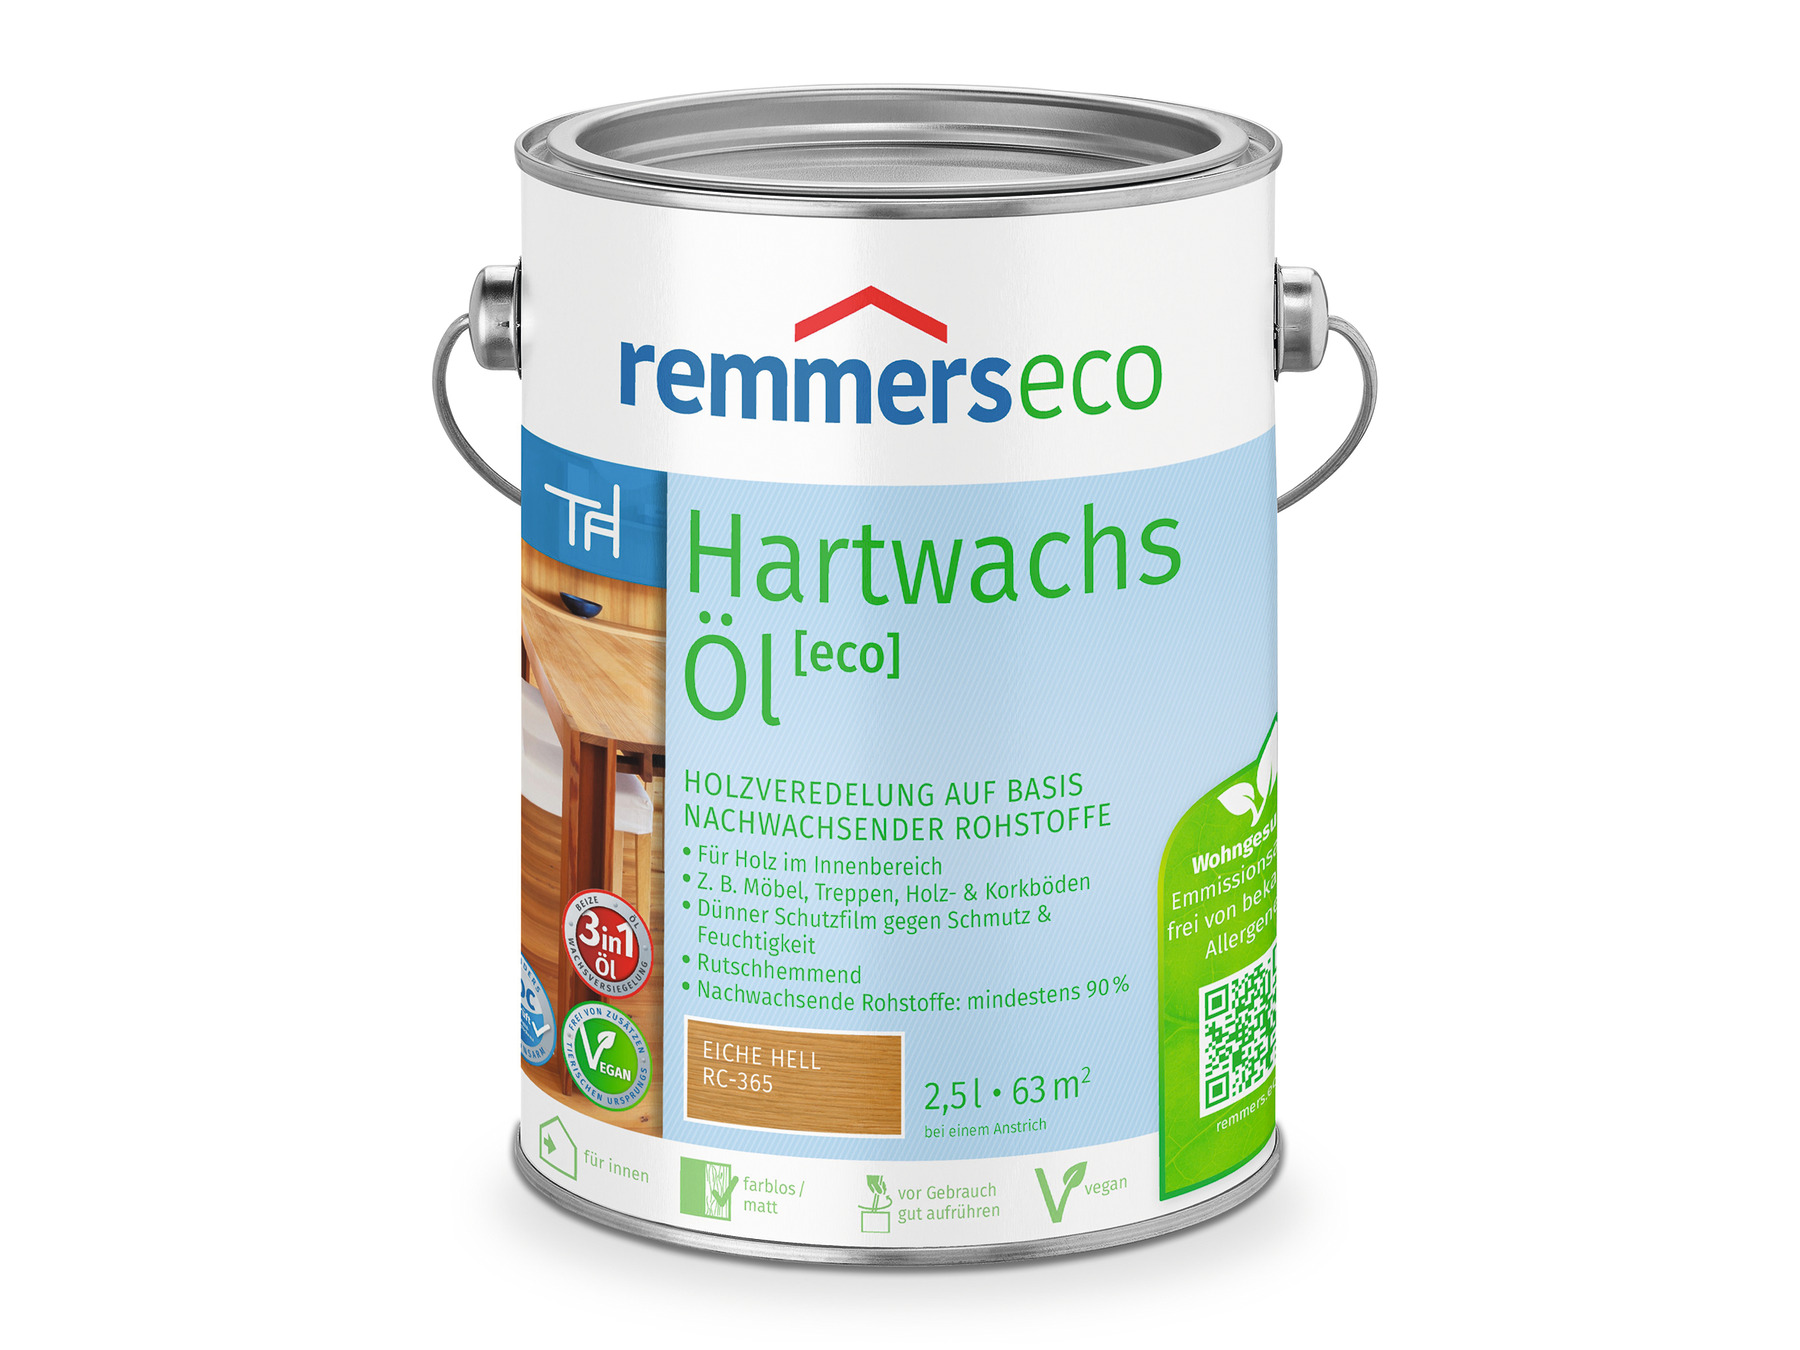 Remmers GmbH Hartwachs-Öl [eco]